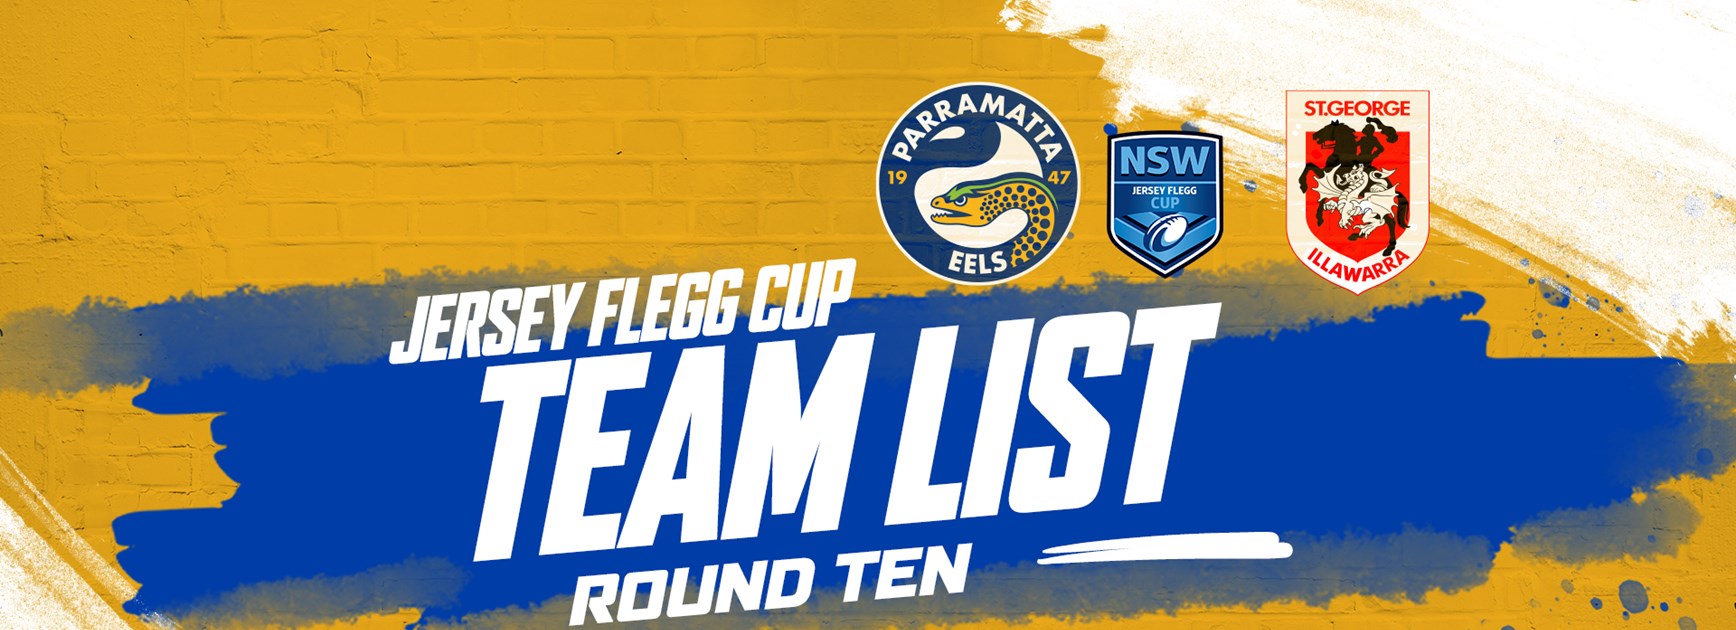 Jersey Flegg Cup Team List - Eels v Dragons, Round Ten